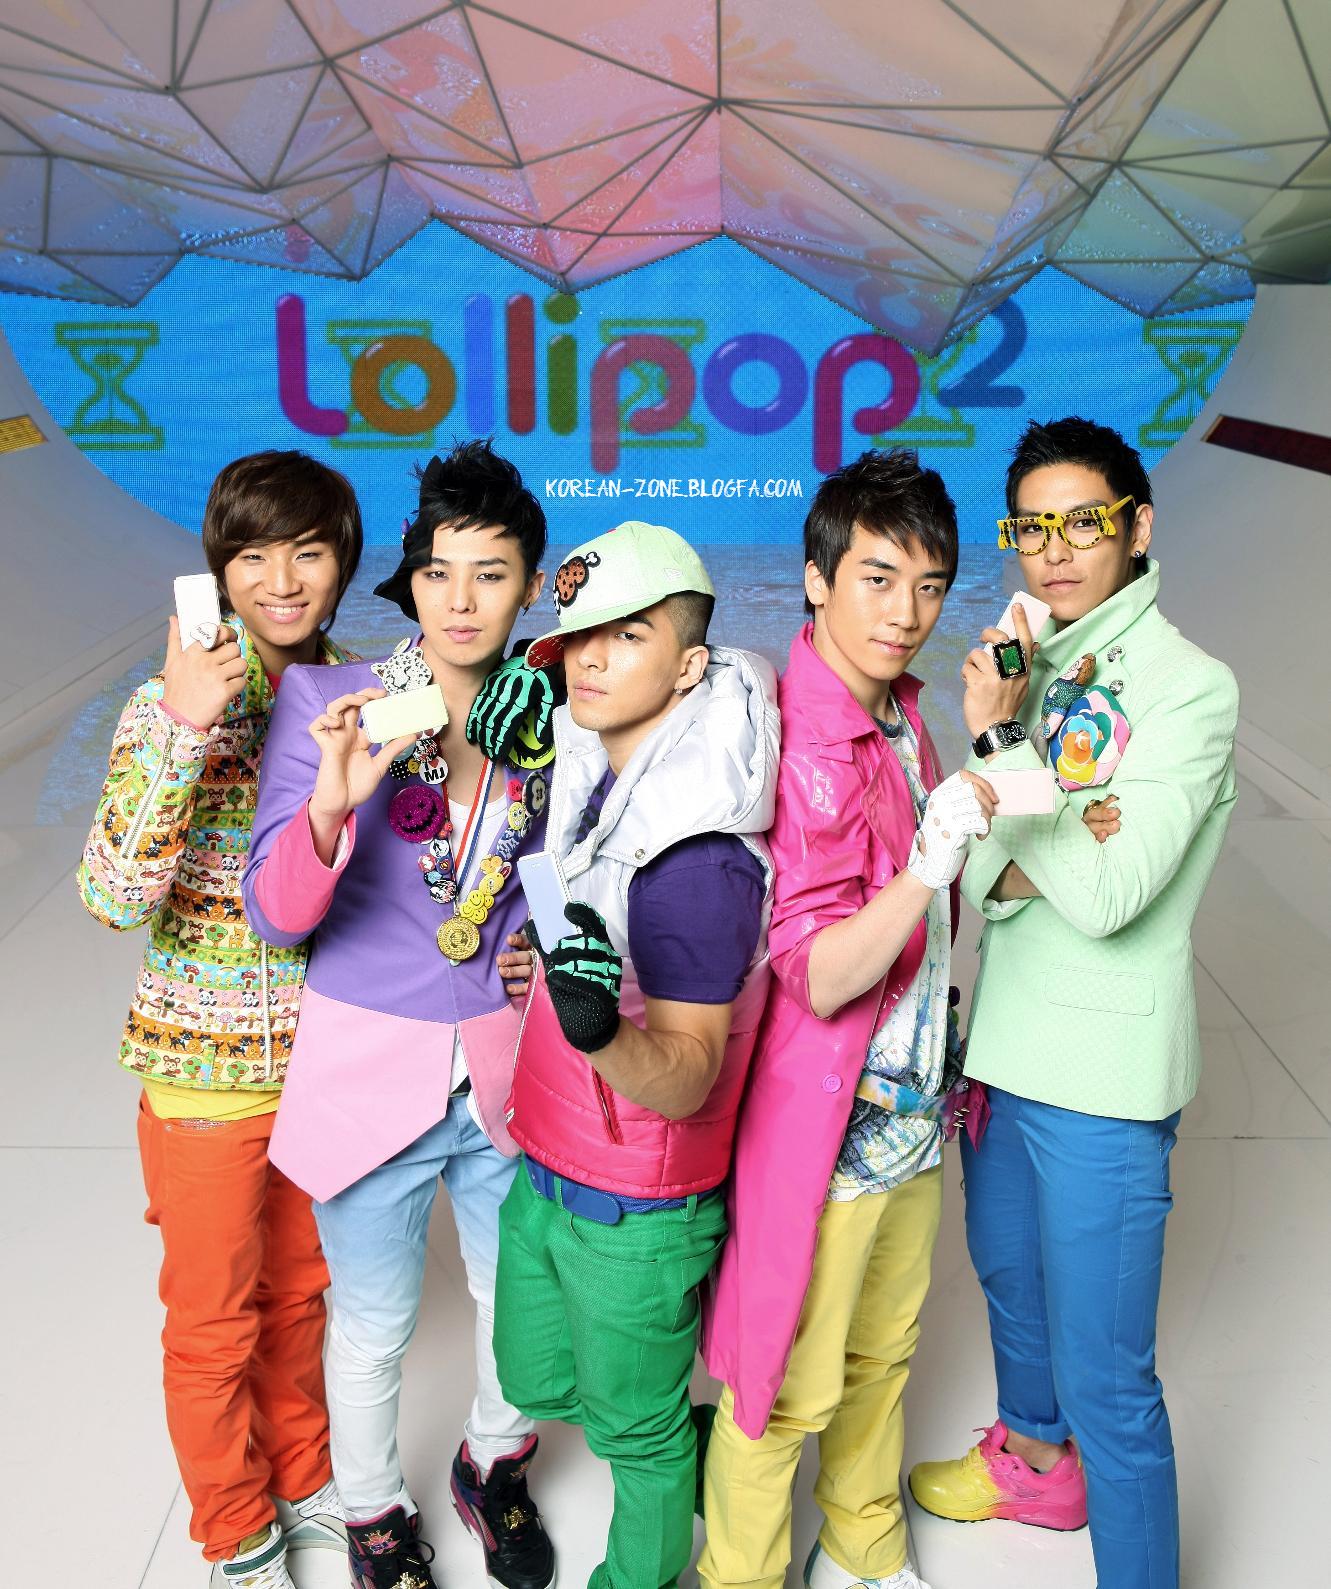 Bang bang участники. Биг бэнг. Корейская группа big Bang. Big Bang участники. Lollipop big Bang.